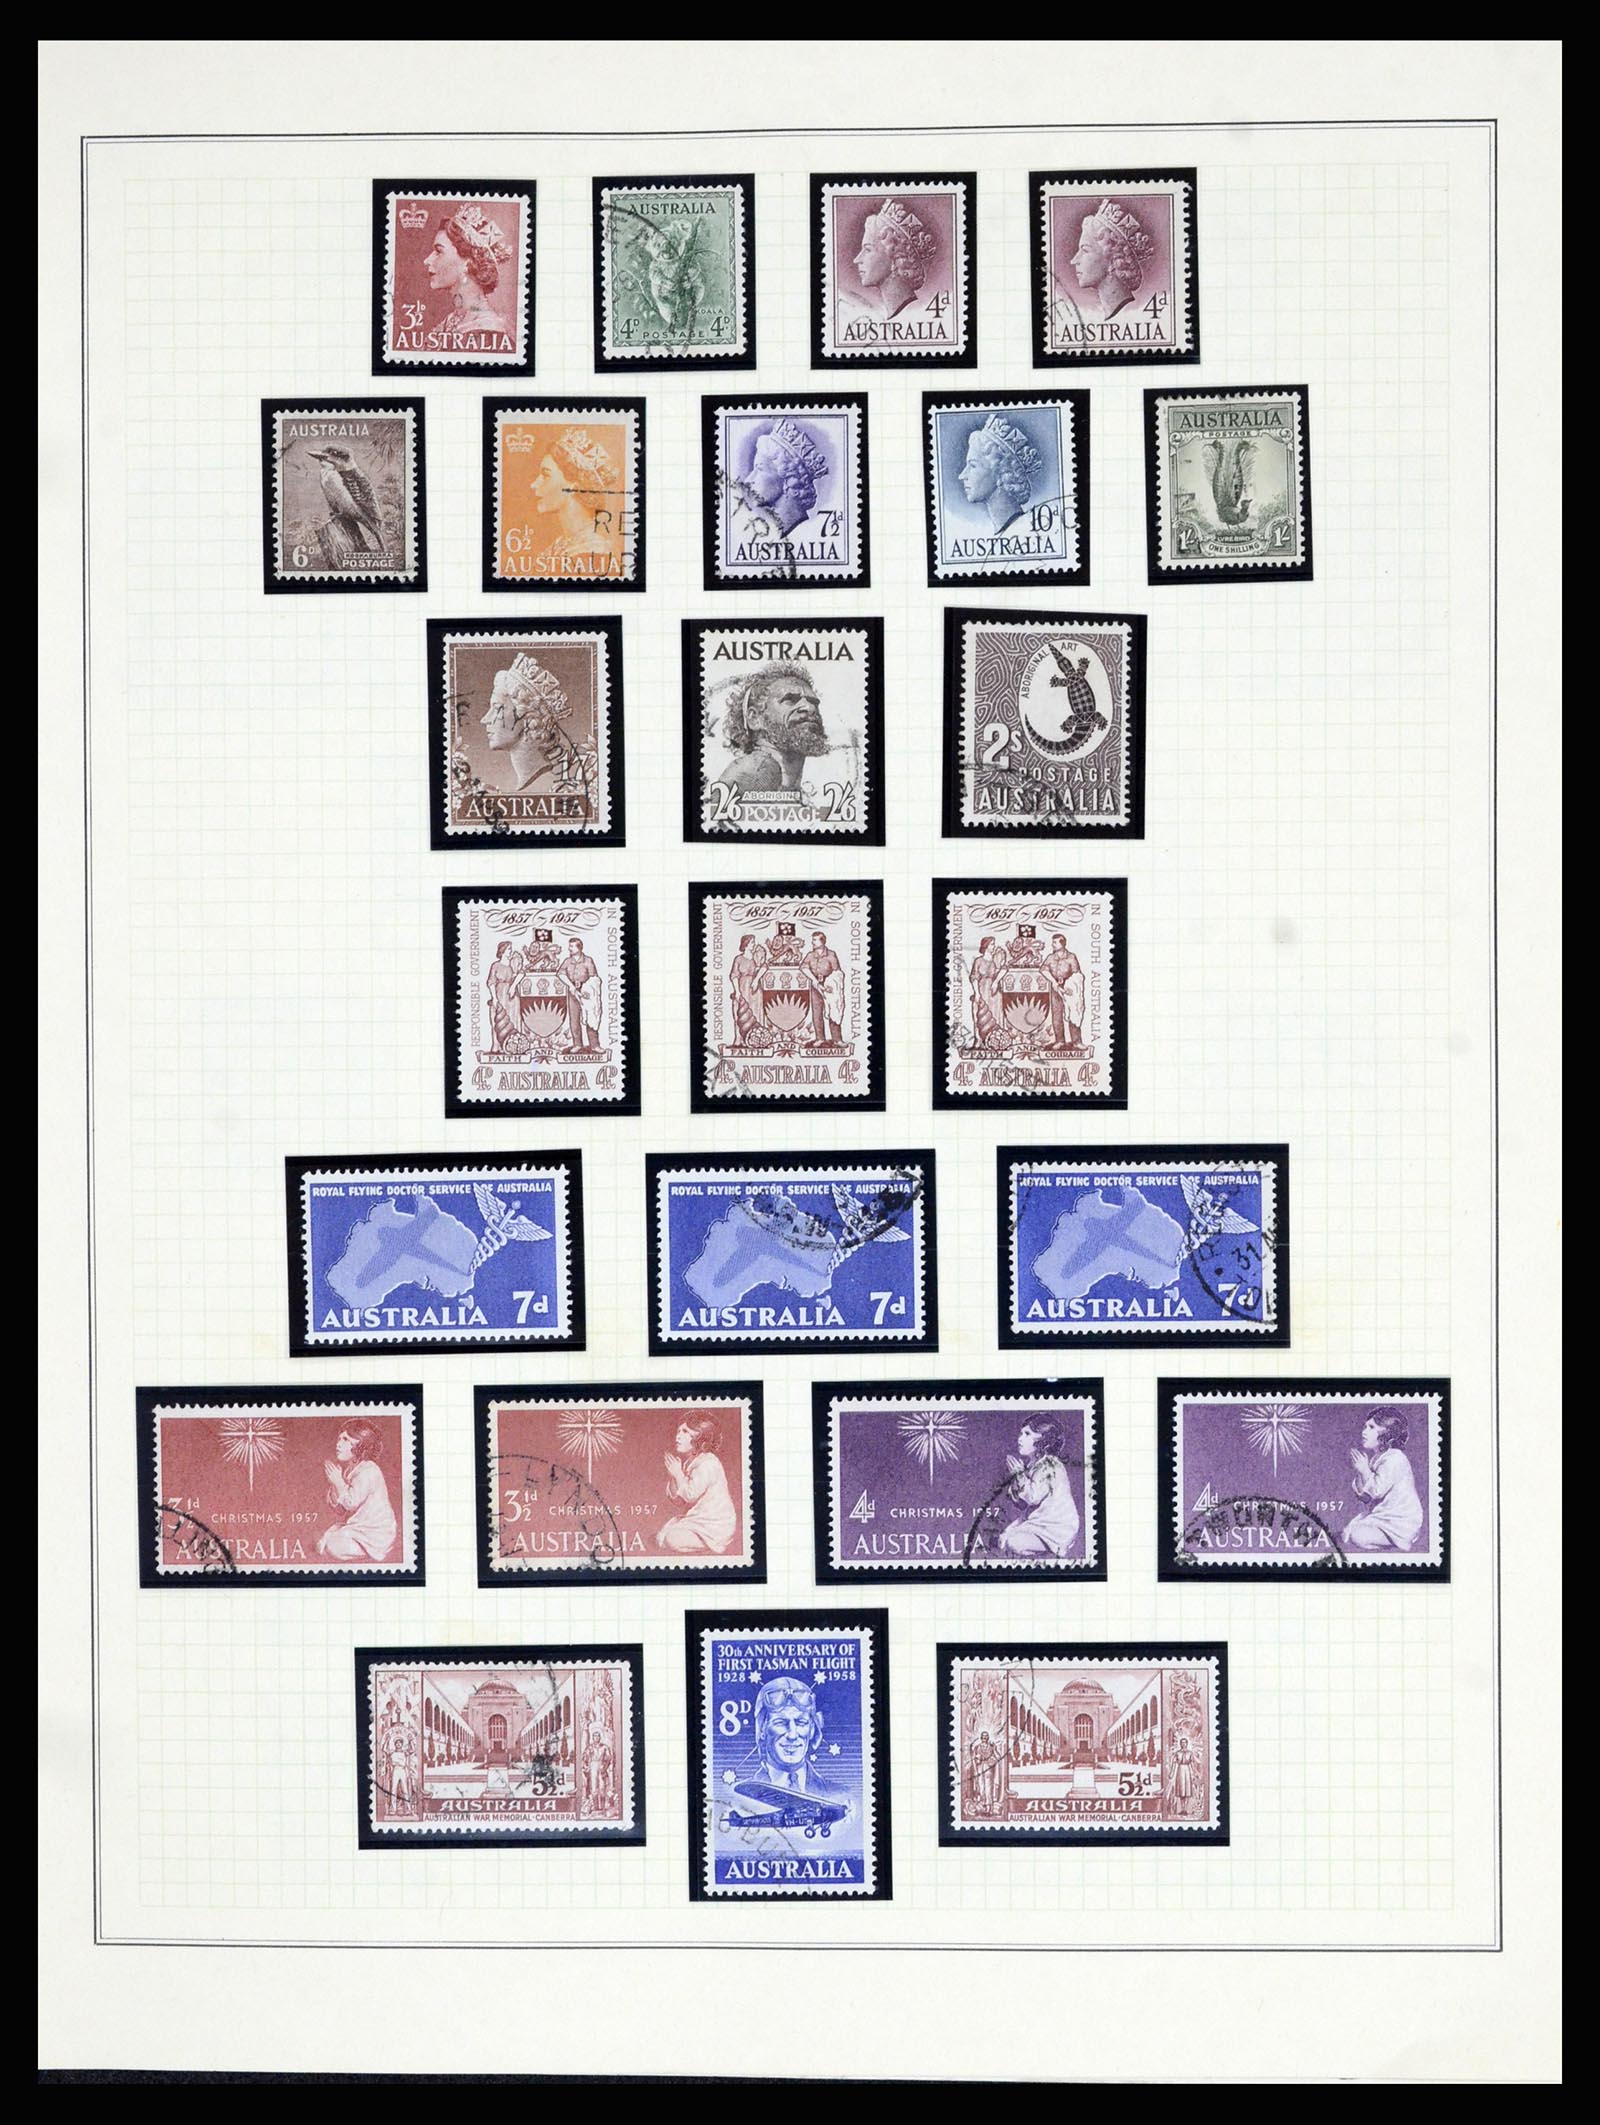 37049 020 - Stamp collection 37049 Australia 1913-1990.